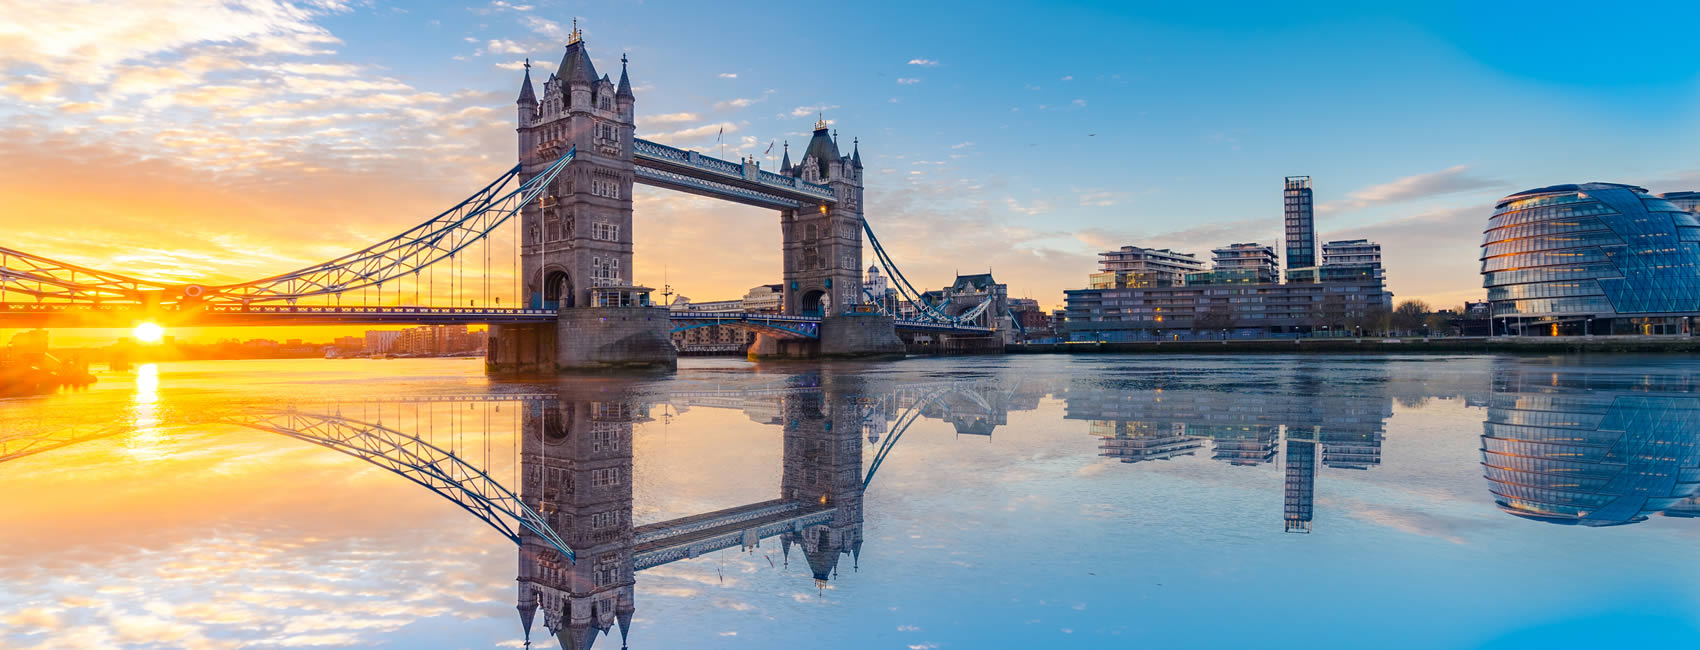 London Bridge and Thames River sunset